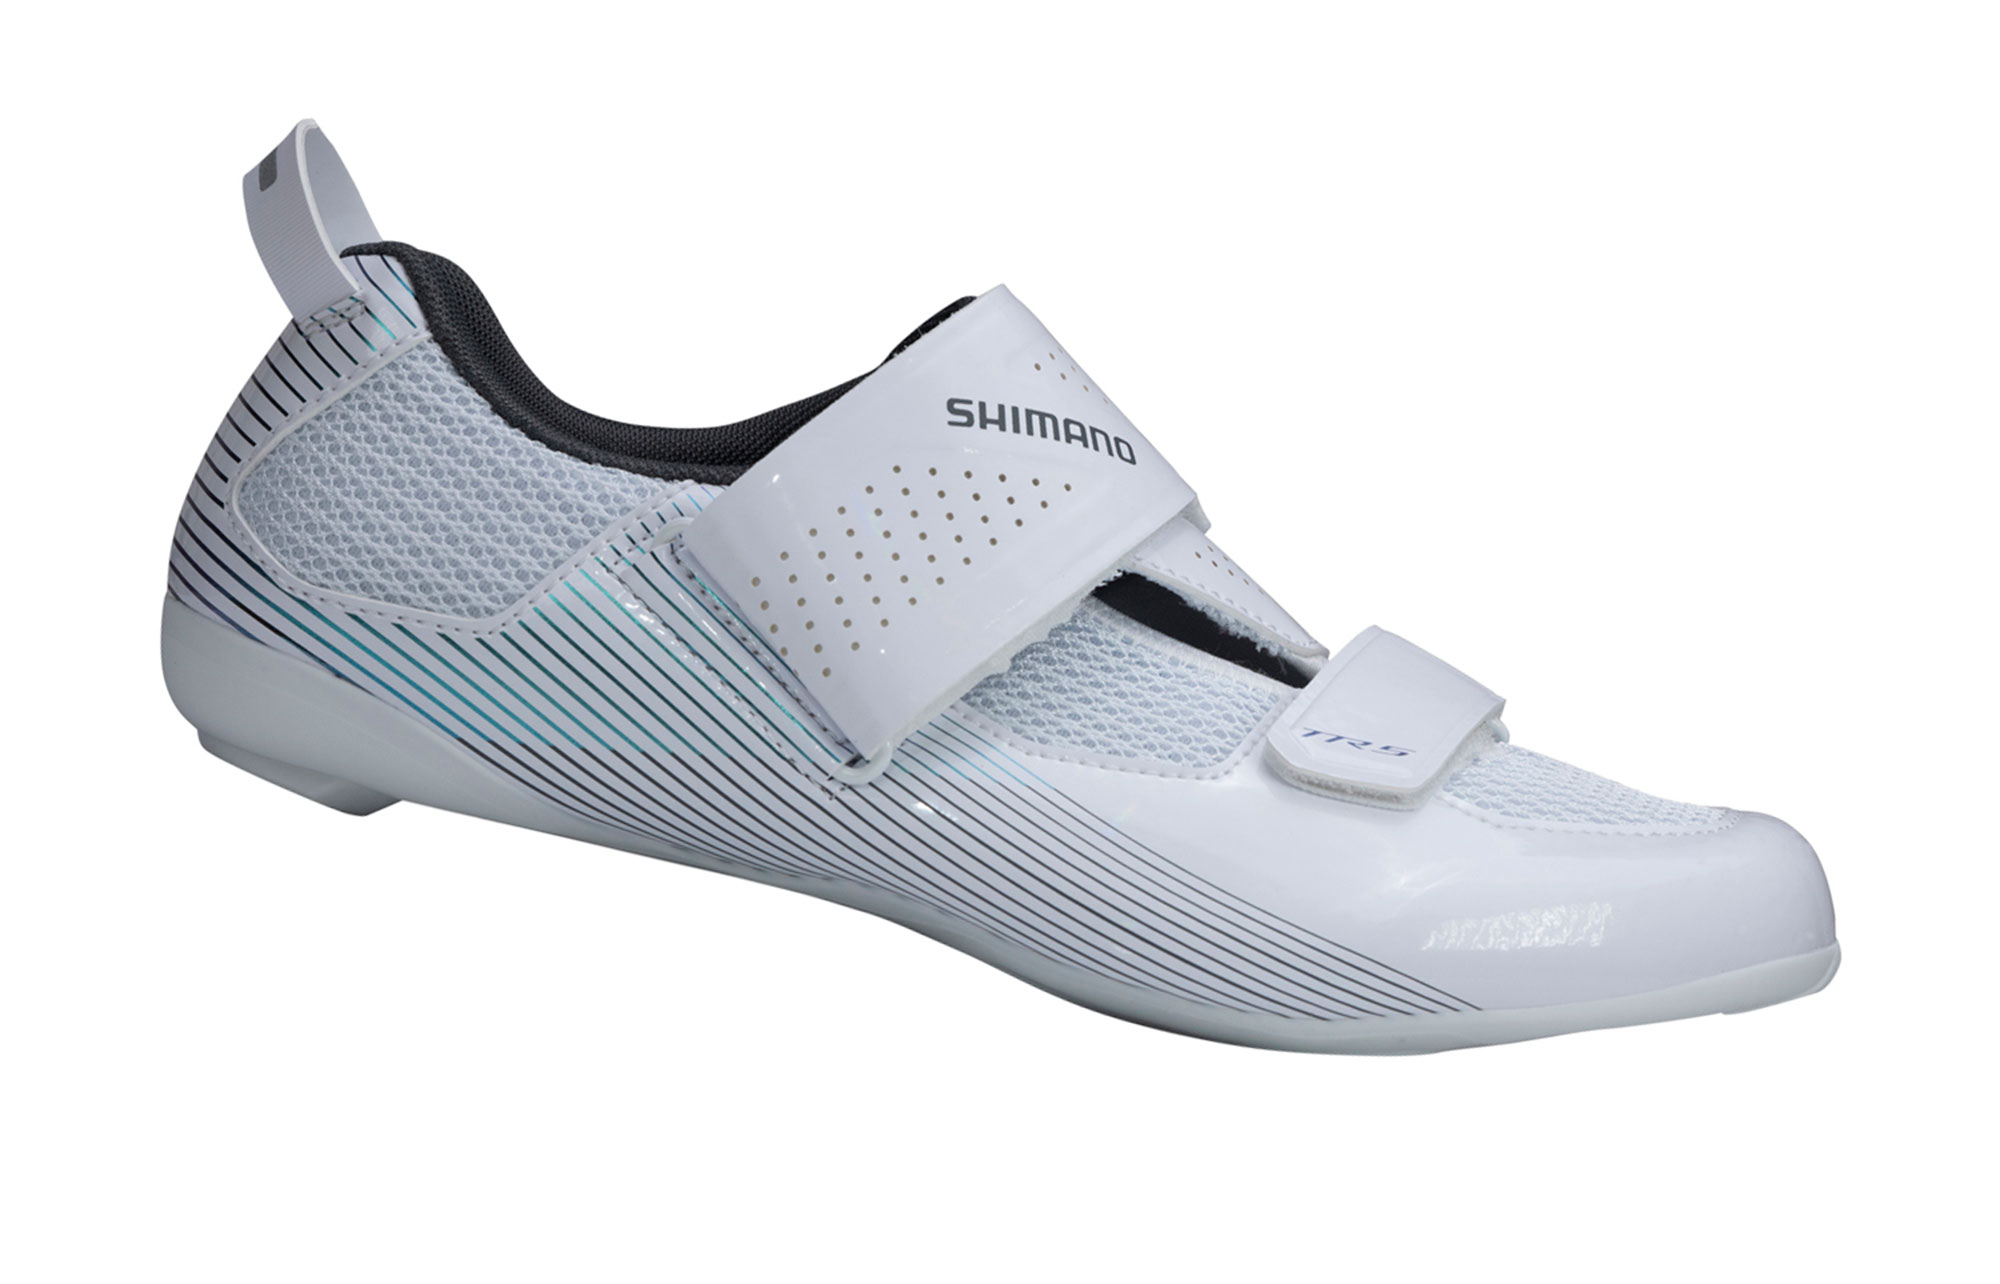 SHIMANO SH-RP501 High-Performance Road Endurance Cycling Bicycle Shoes; Navy Dot; 42